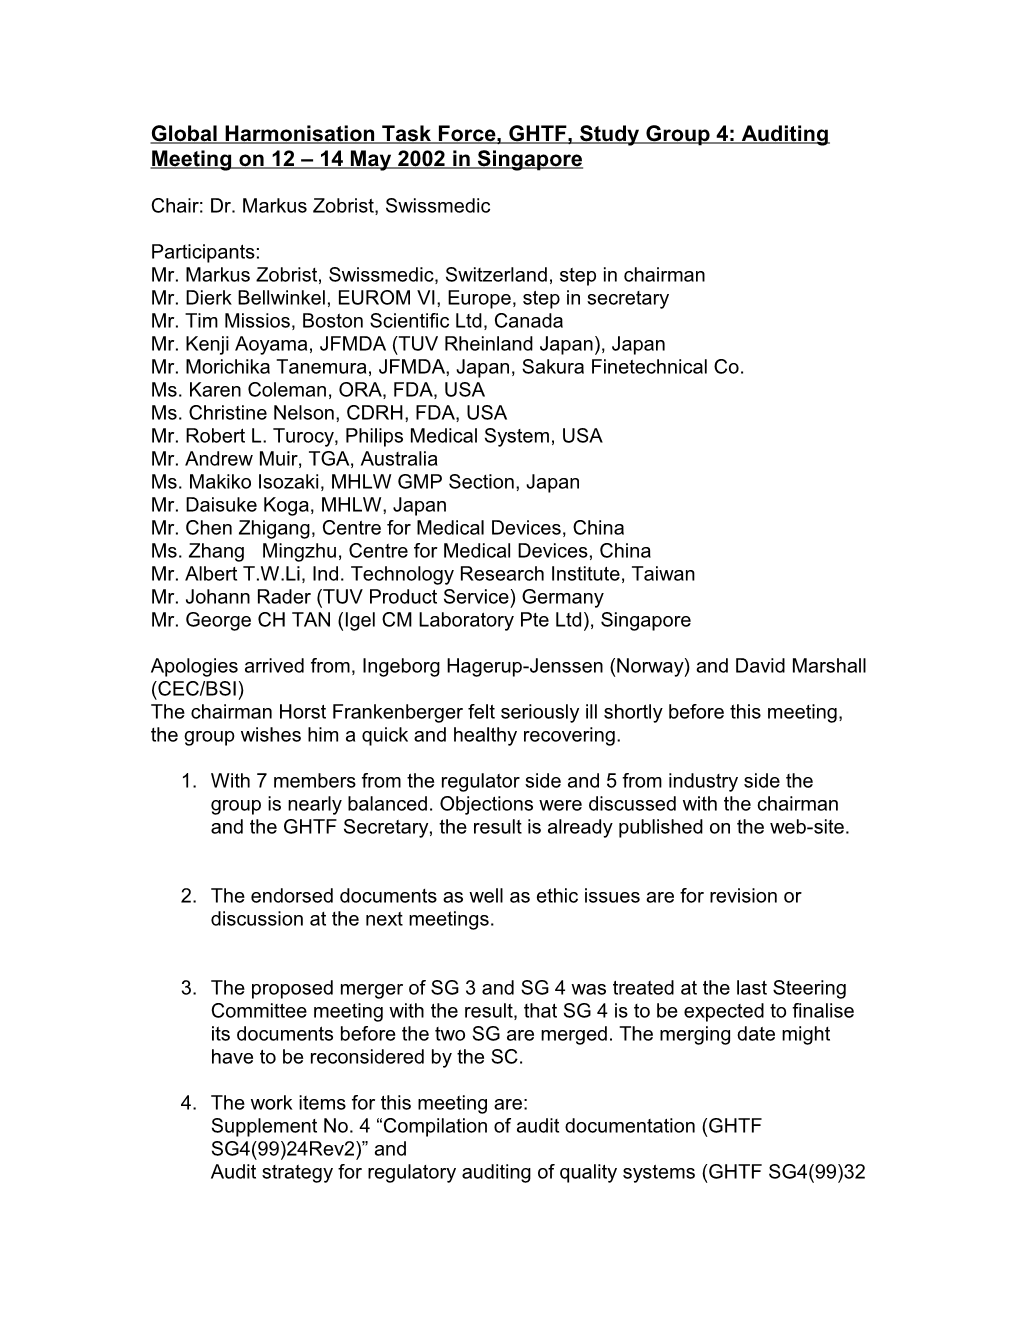 GHTF SG4 Auditing Meeting Minutes - May 2002